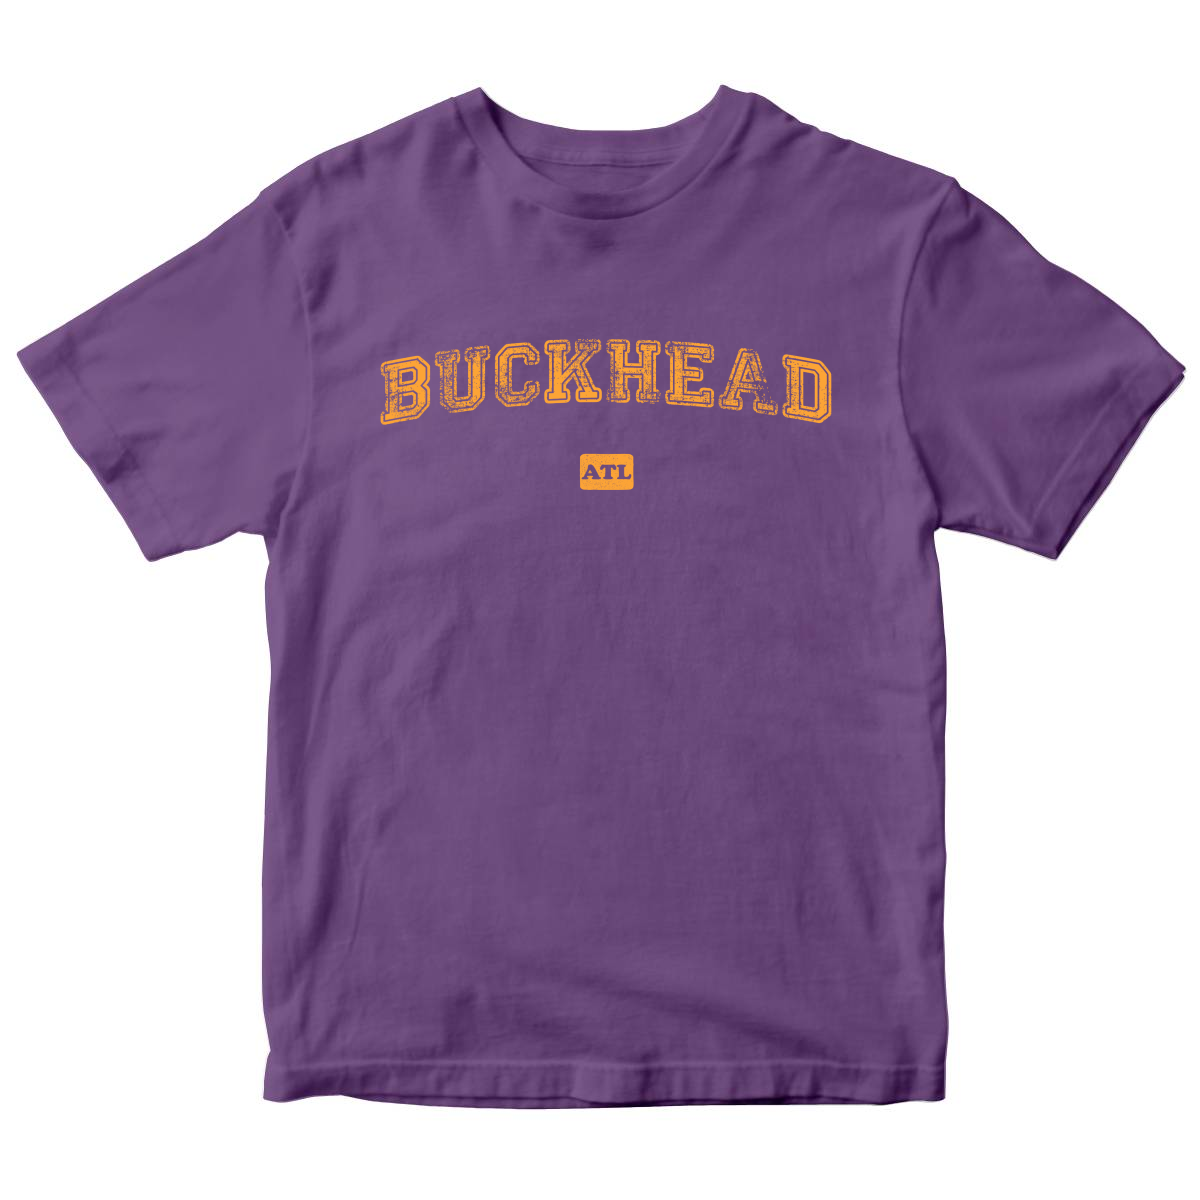 Buckhead ATL Represent Kids T-shirt | Purple